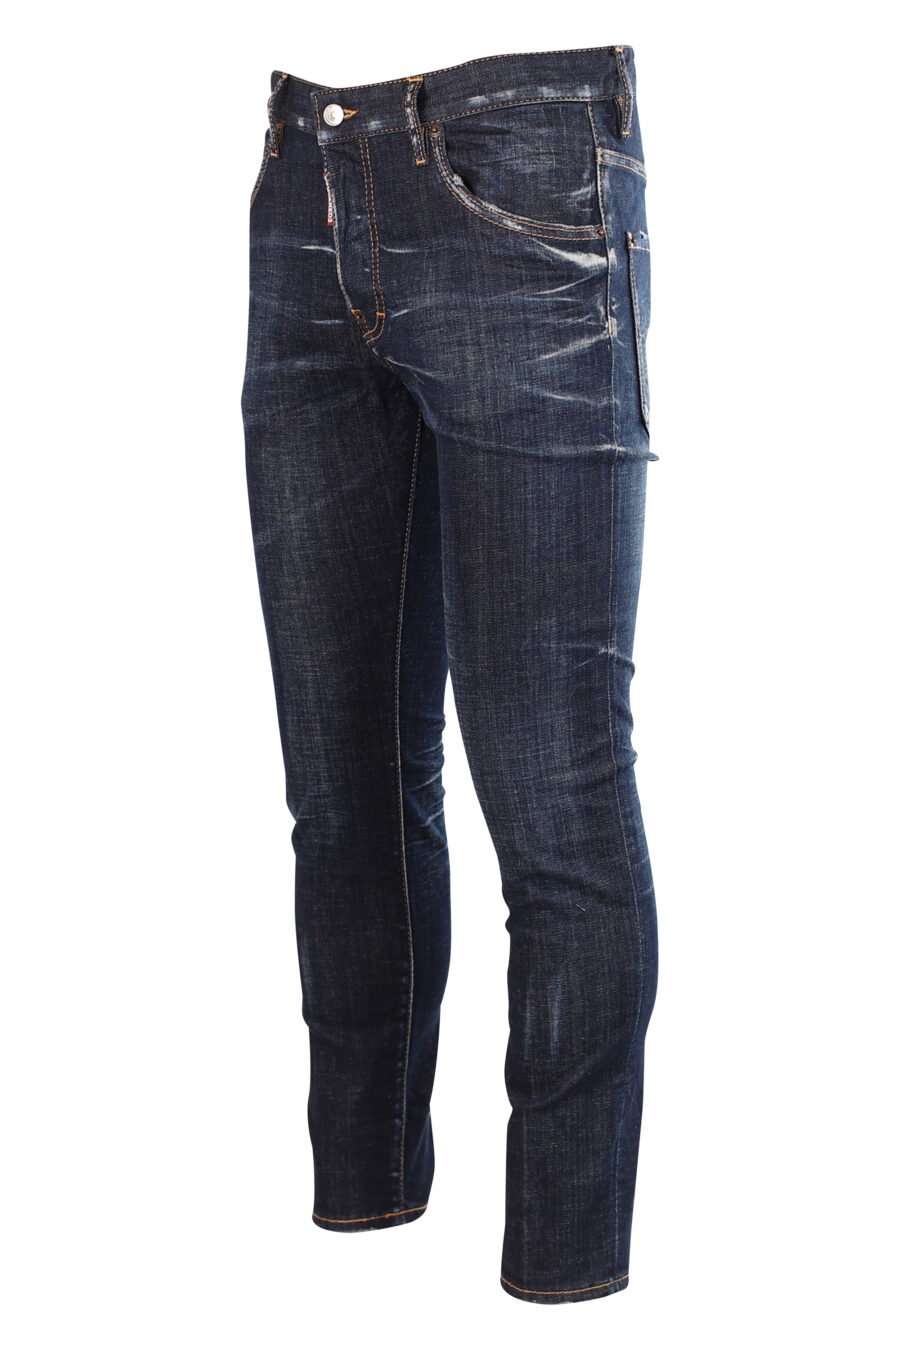 Dark blue semi frayed "skater jean" jeans - 8052134939215 2